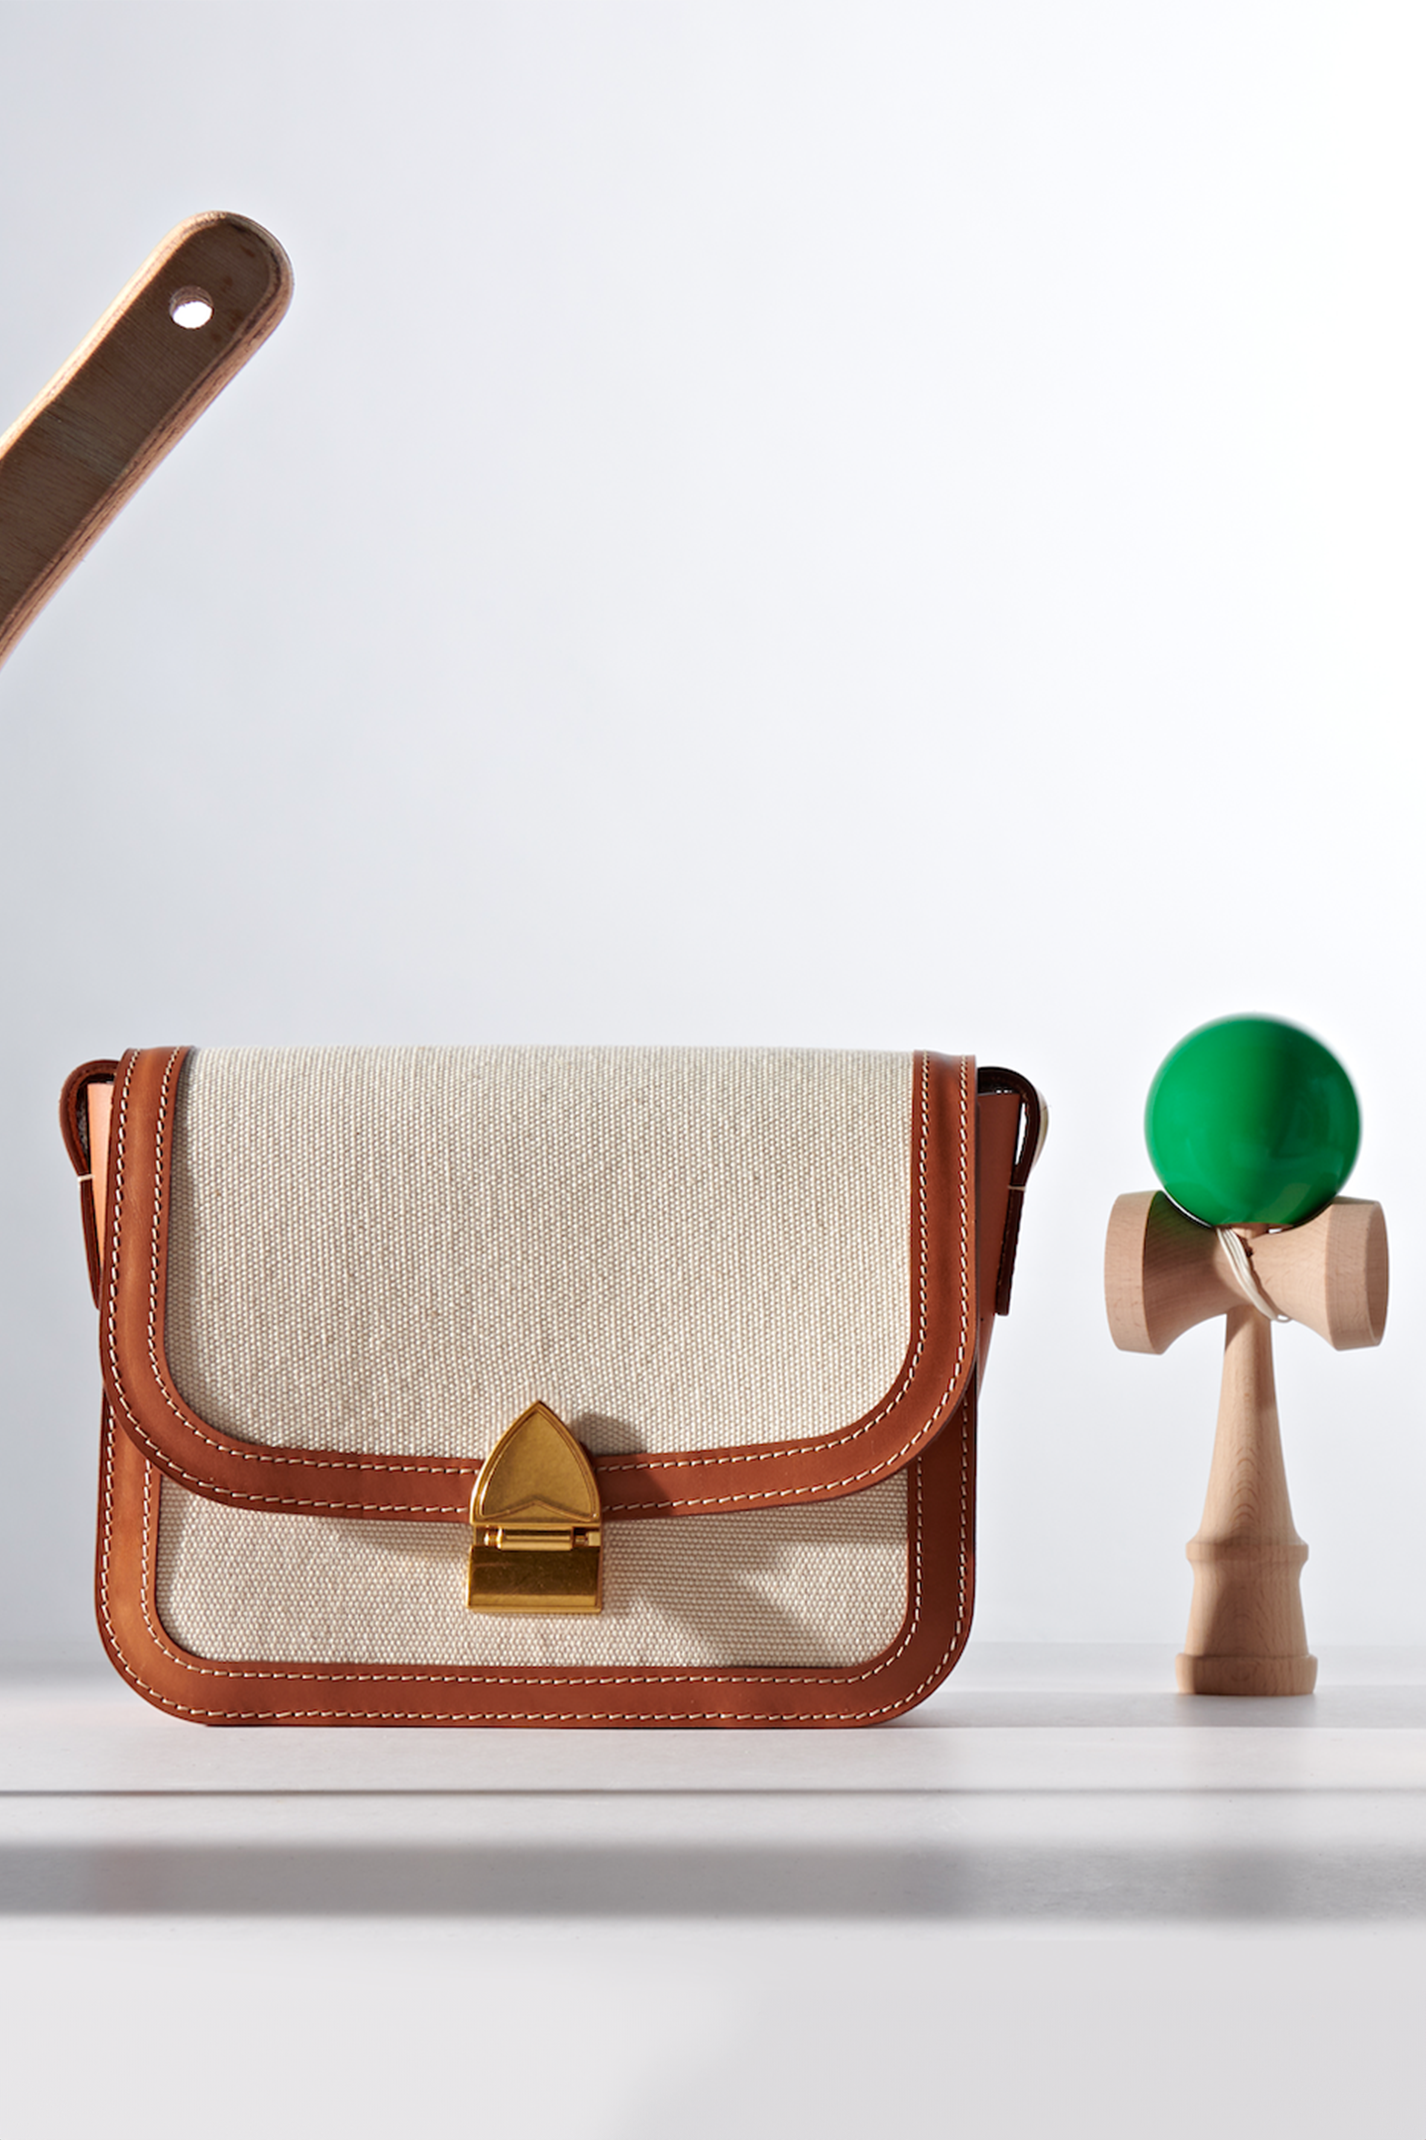 The Colette handbag - Nil